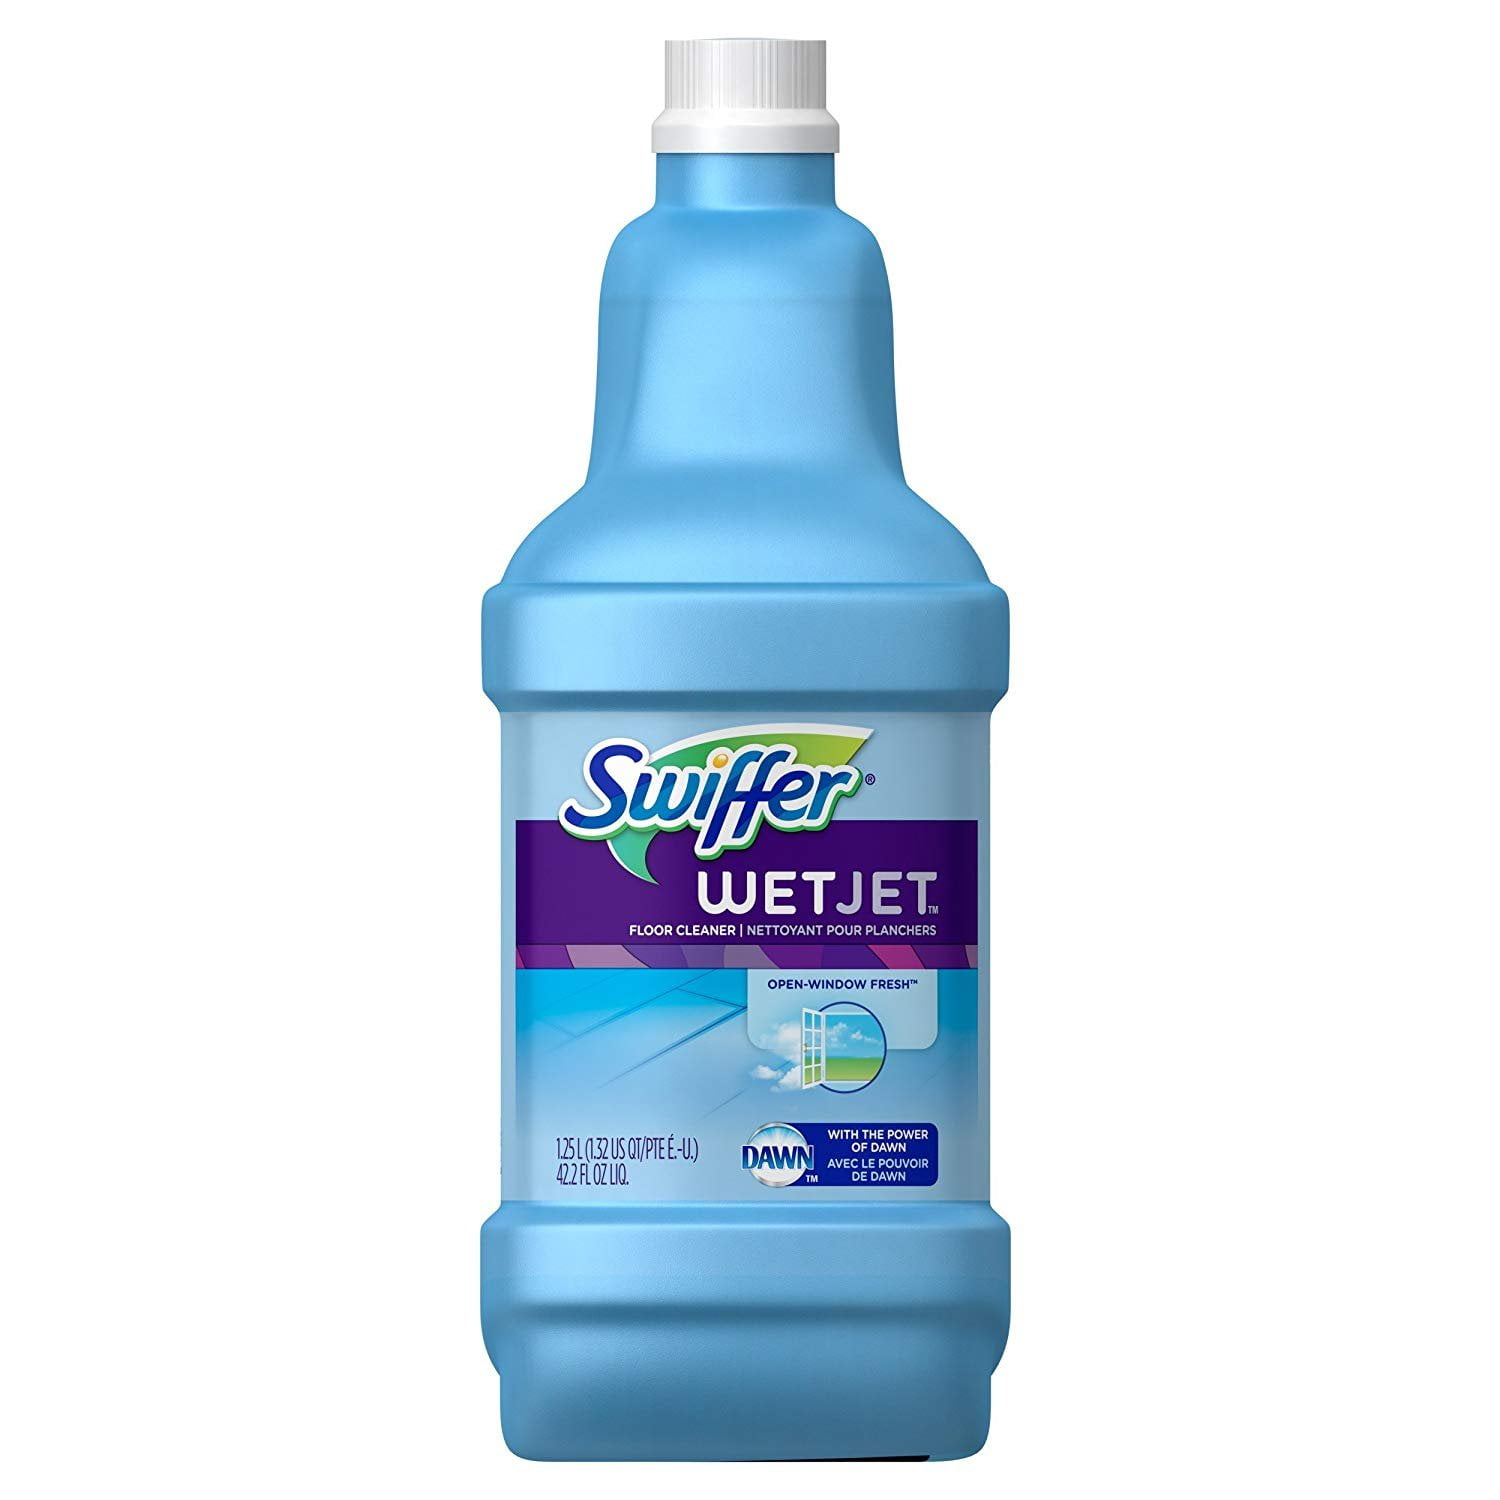 Swiffer WetJet 1.25 Liter Multi-Purpose Open-Window Fresh Floor